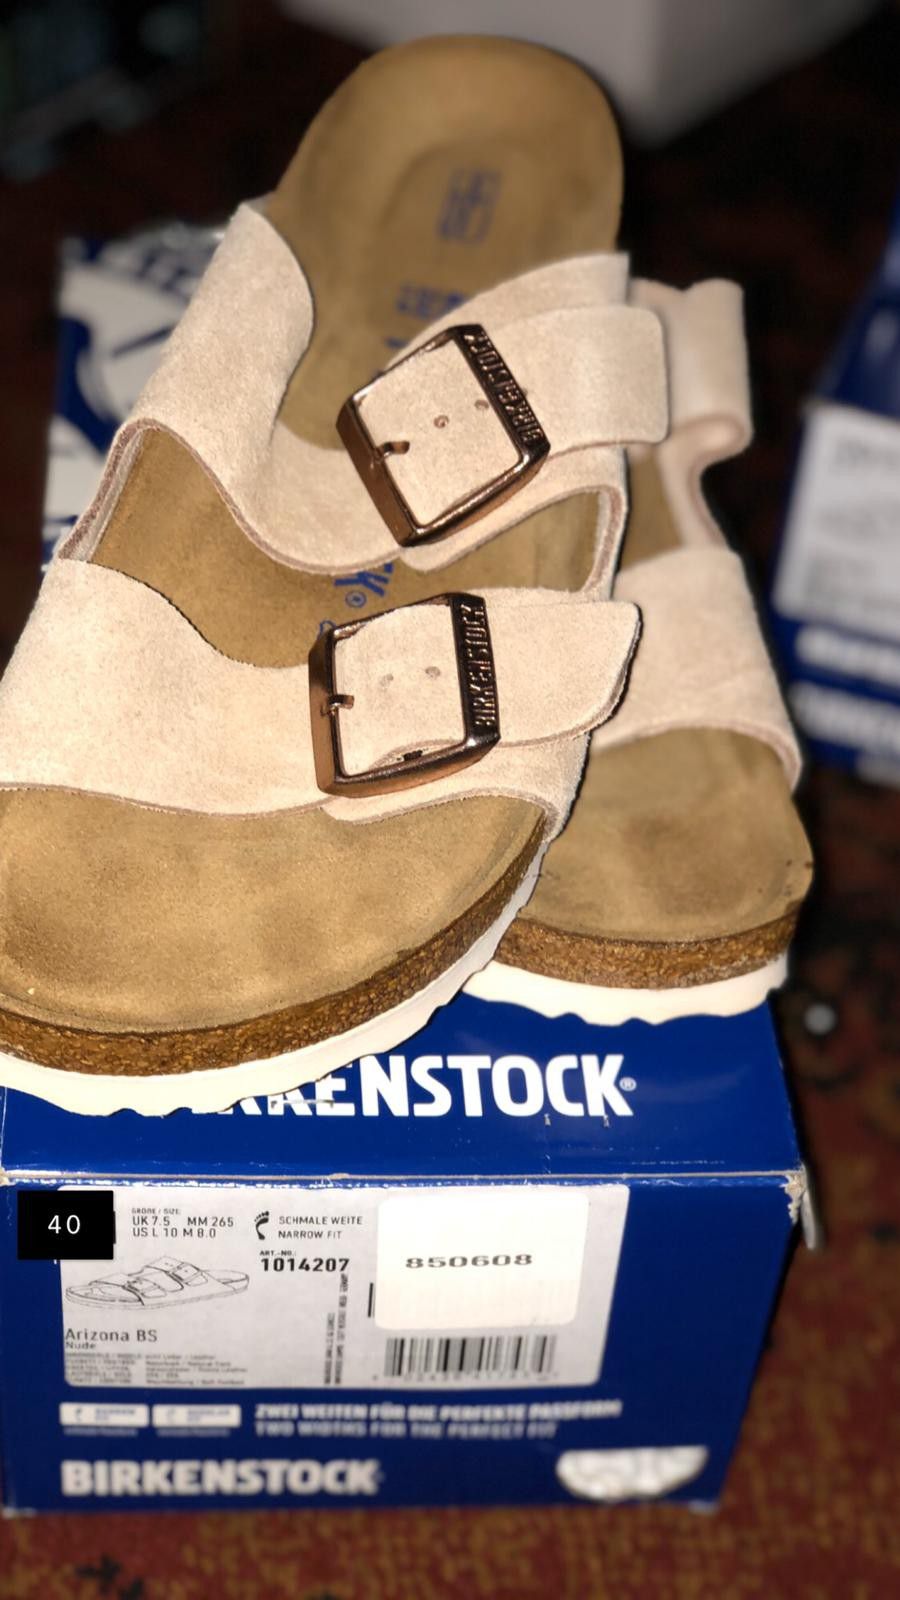 Birkenstock sandals size 40 L9 M7